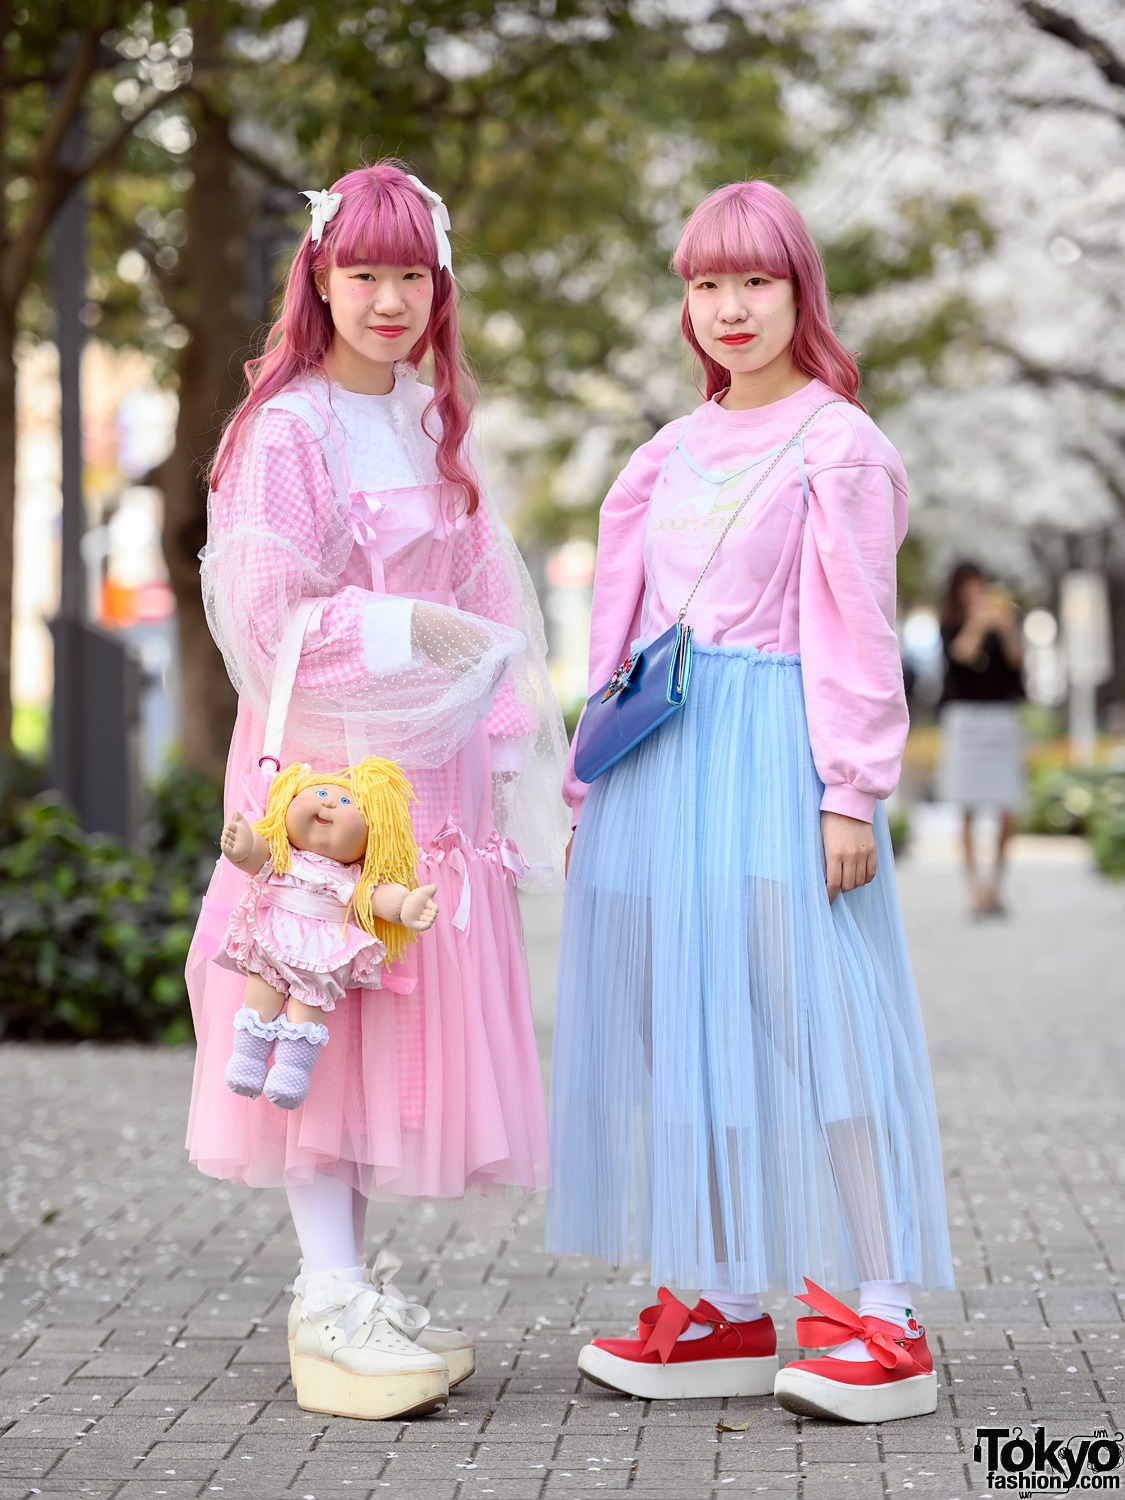 tokyo-fashion:  18-year-old Japanese twins Suzune and Ayane on the street near Bunka